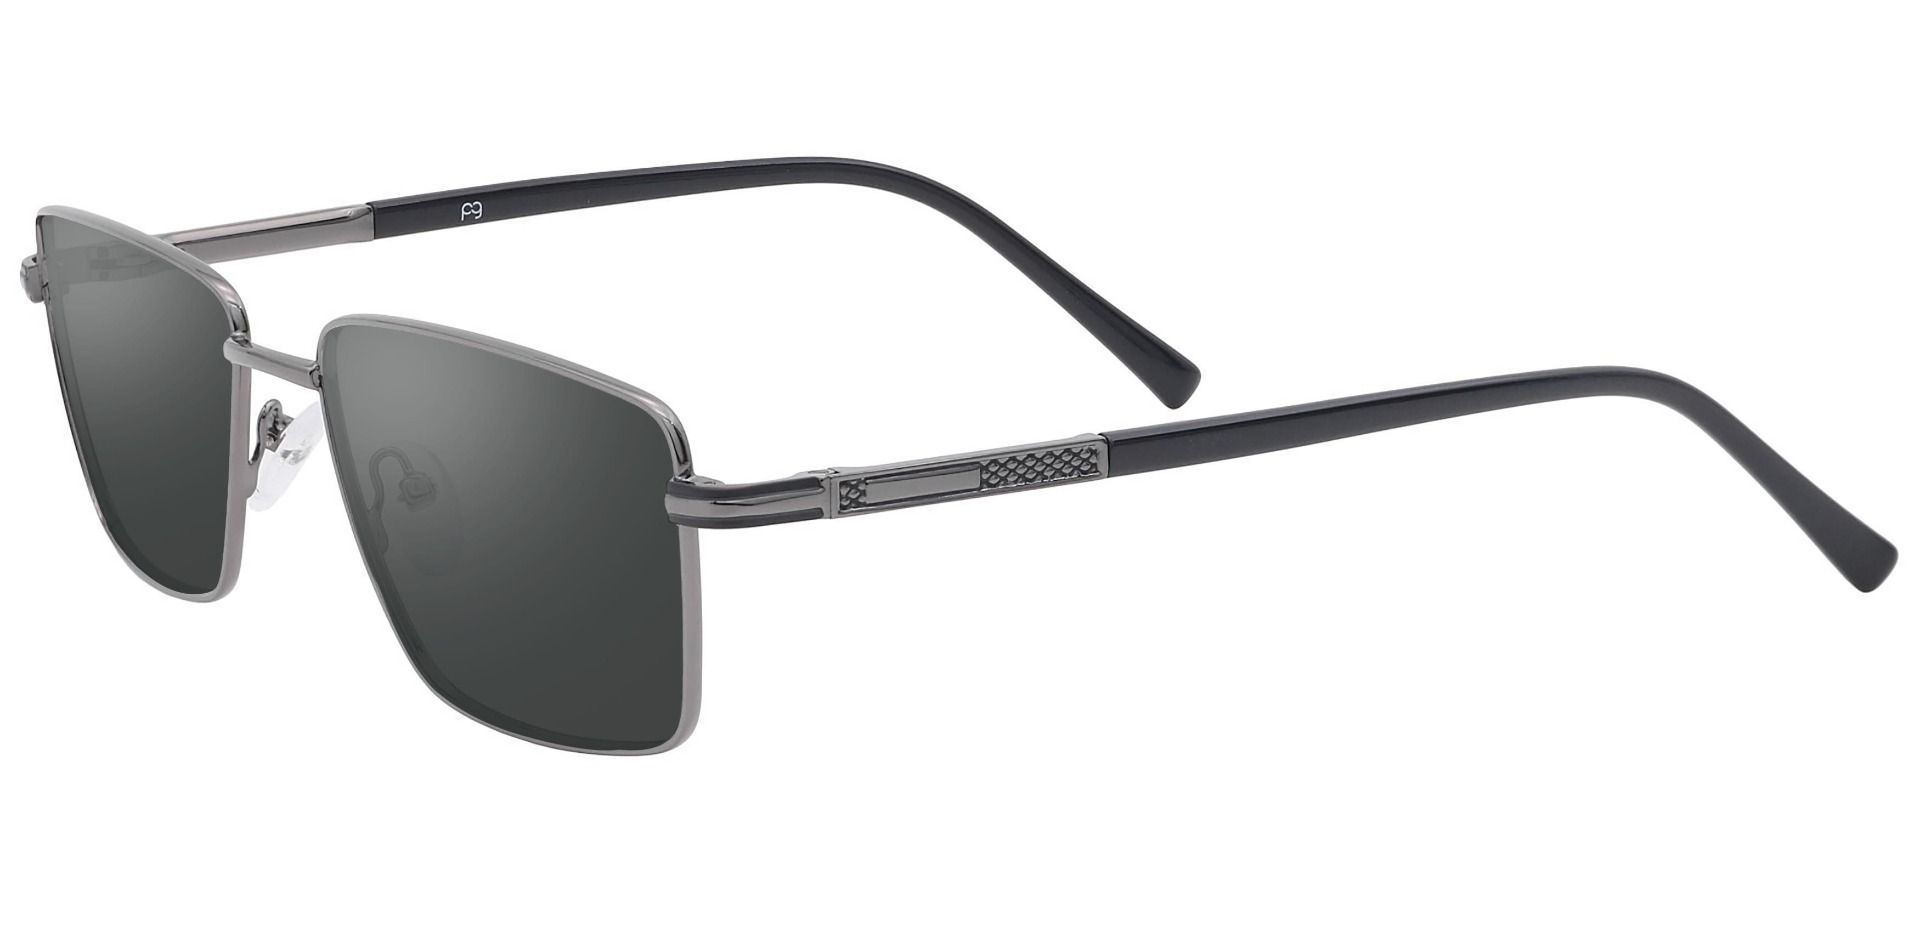 Daniel Rectangle Non-Rx Sunglasses - Gray Frame With Gray Lenses